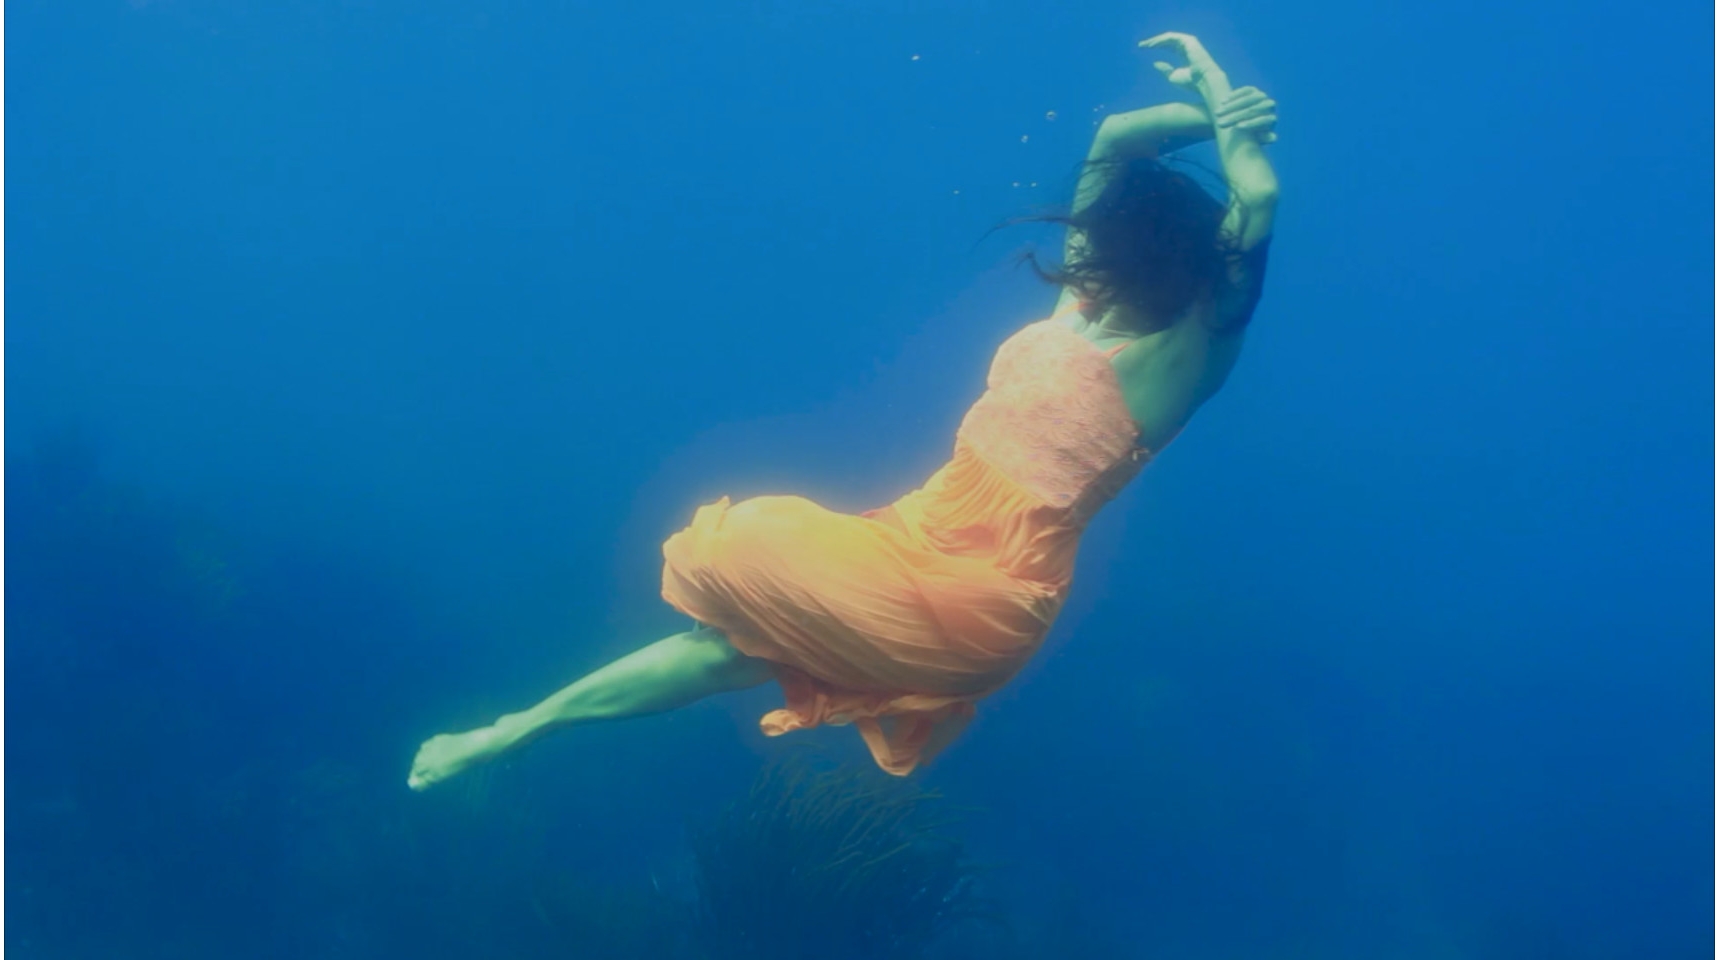 Woman swimming underwater in orange dress